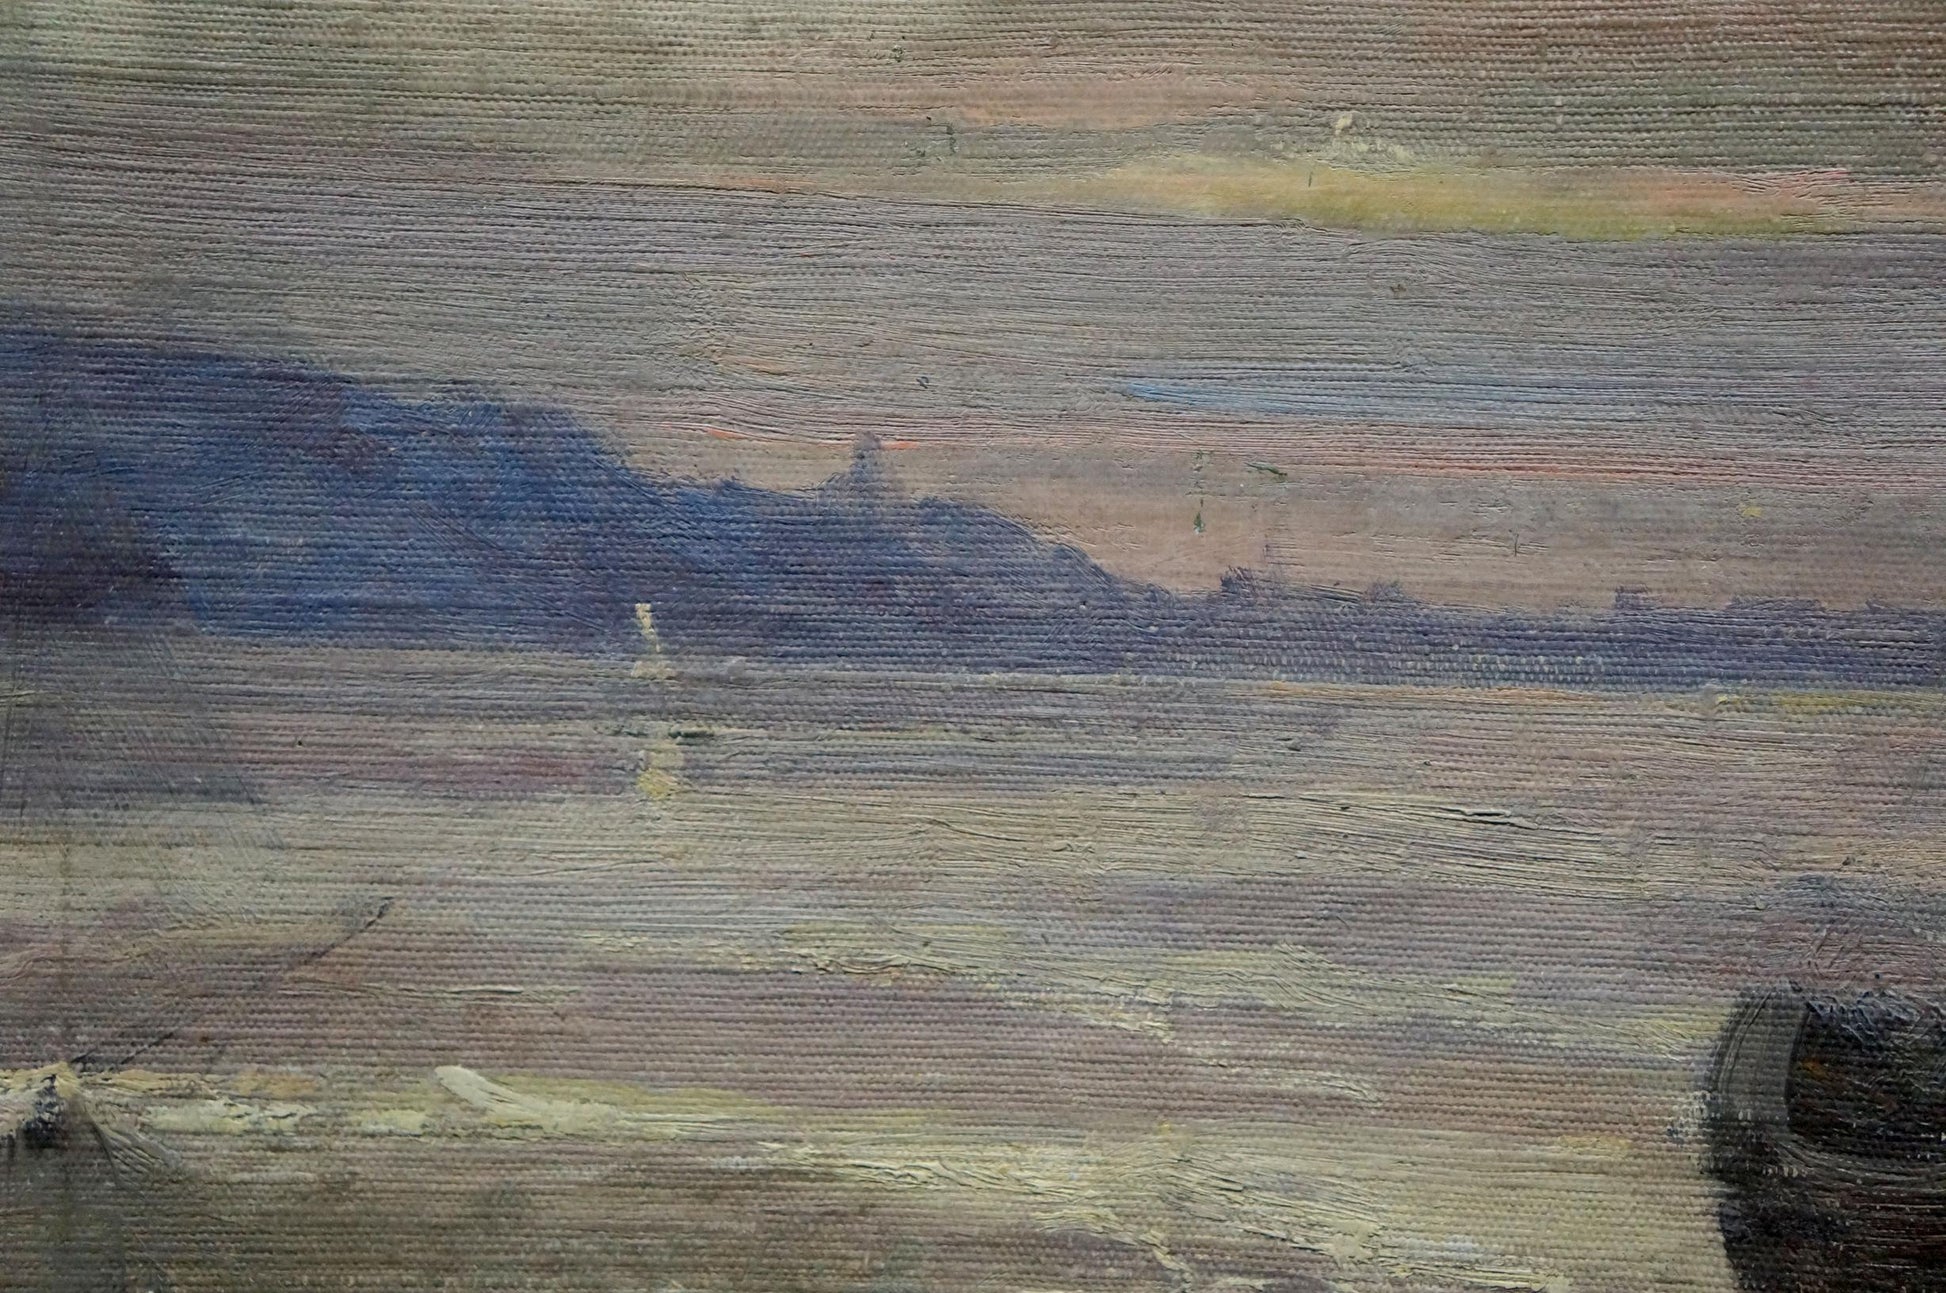 Konovalyuk Fedor Zotikovich's oil painting portrays a mesmerizing seascape